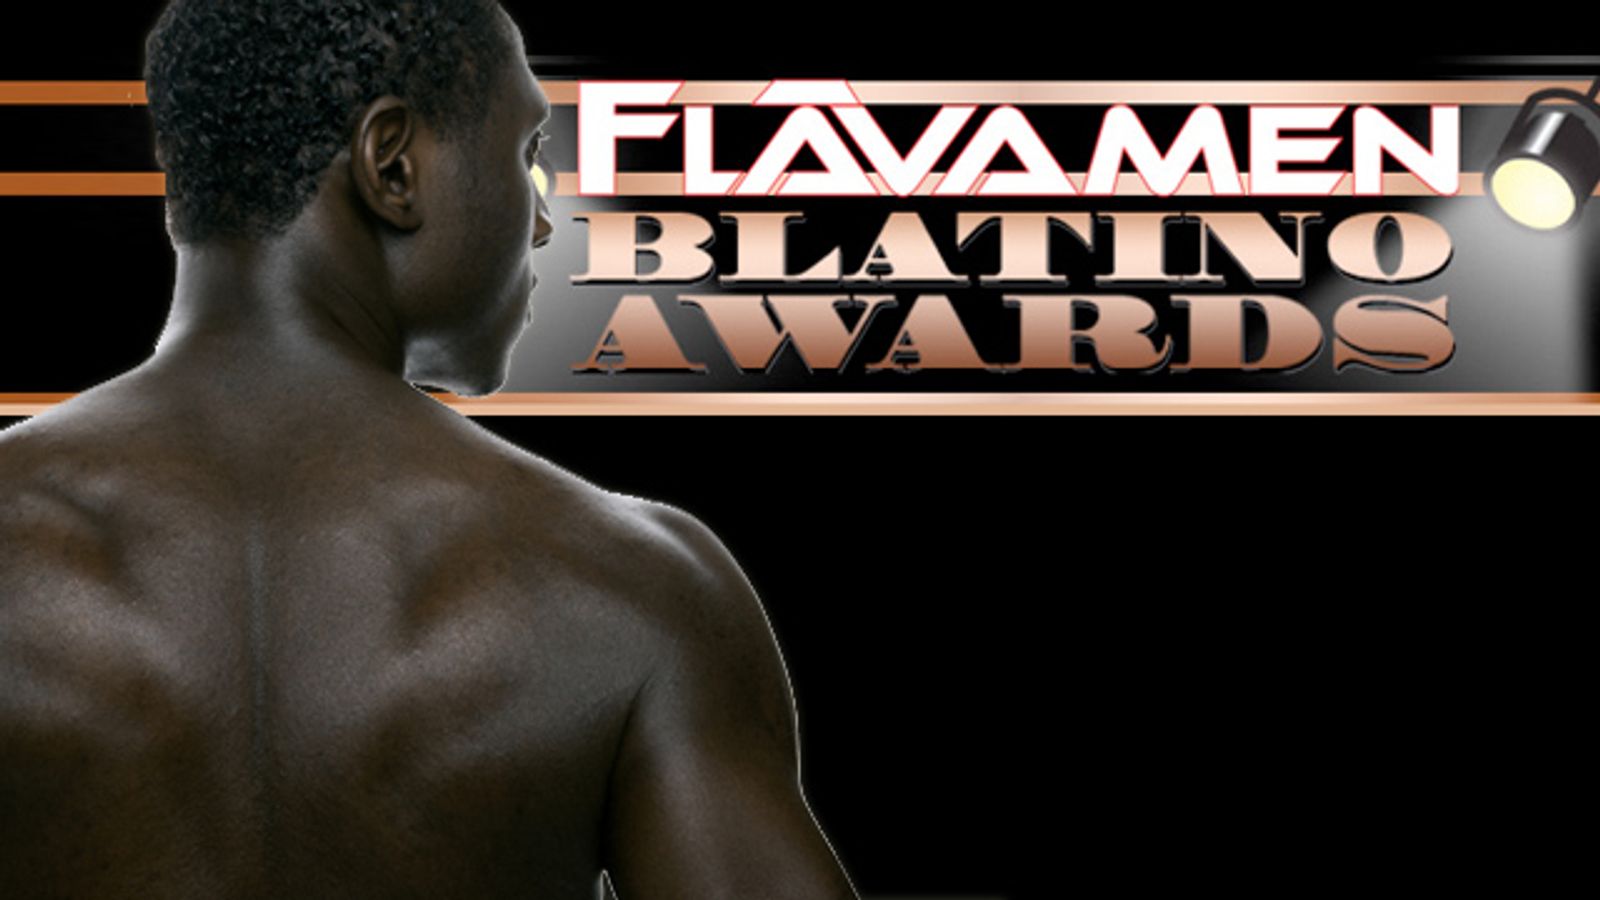 2009 Blatino Awards Nominations Announced